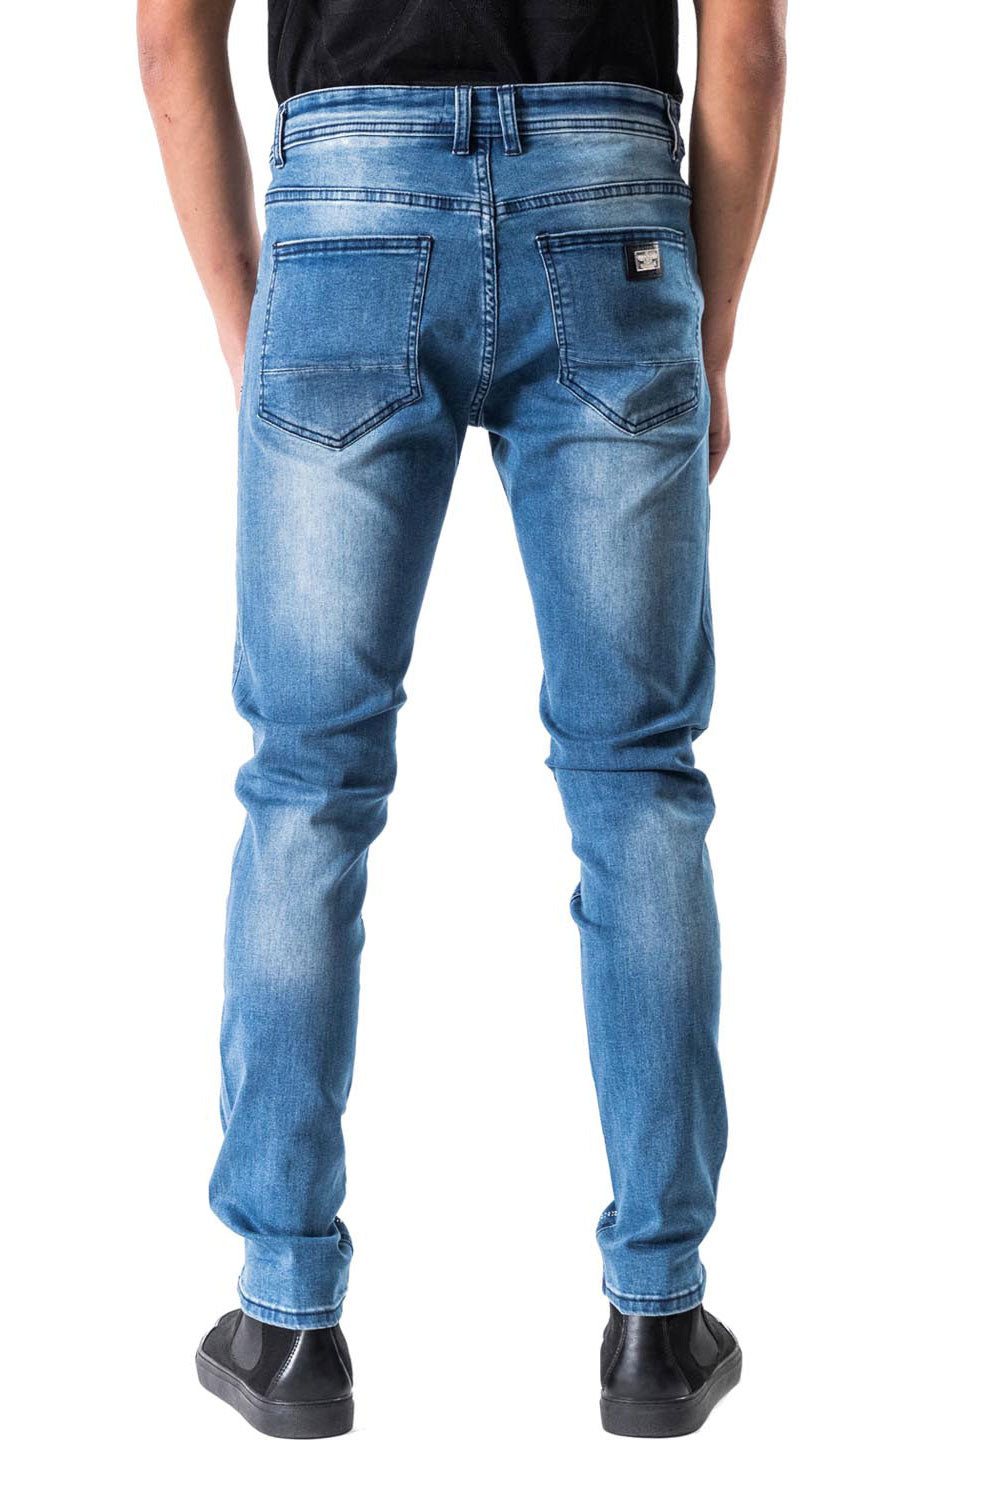 BARABAS Men's Rhinestone Slim Fit Blue Denim Jeans SN8886-1